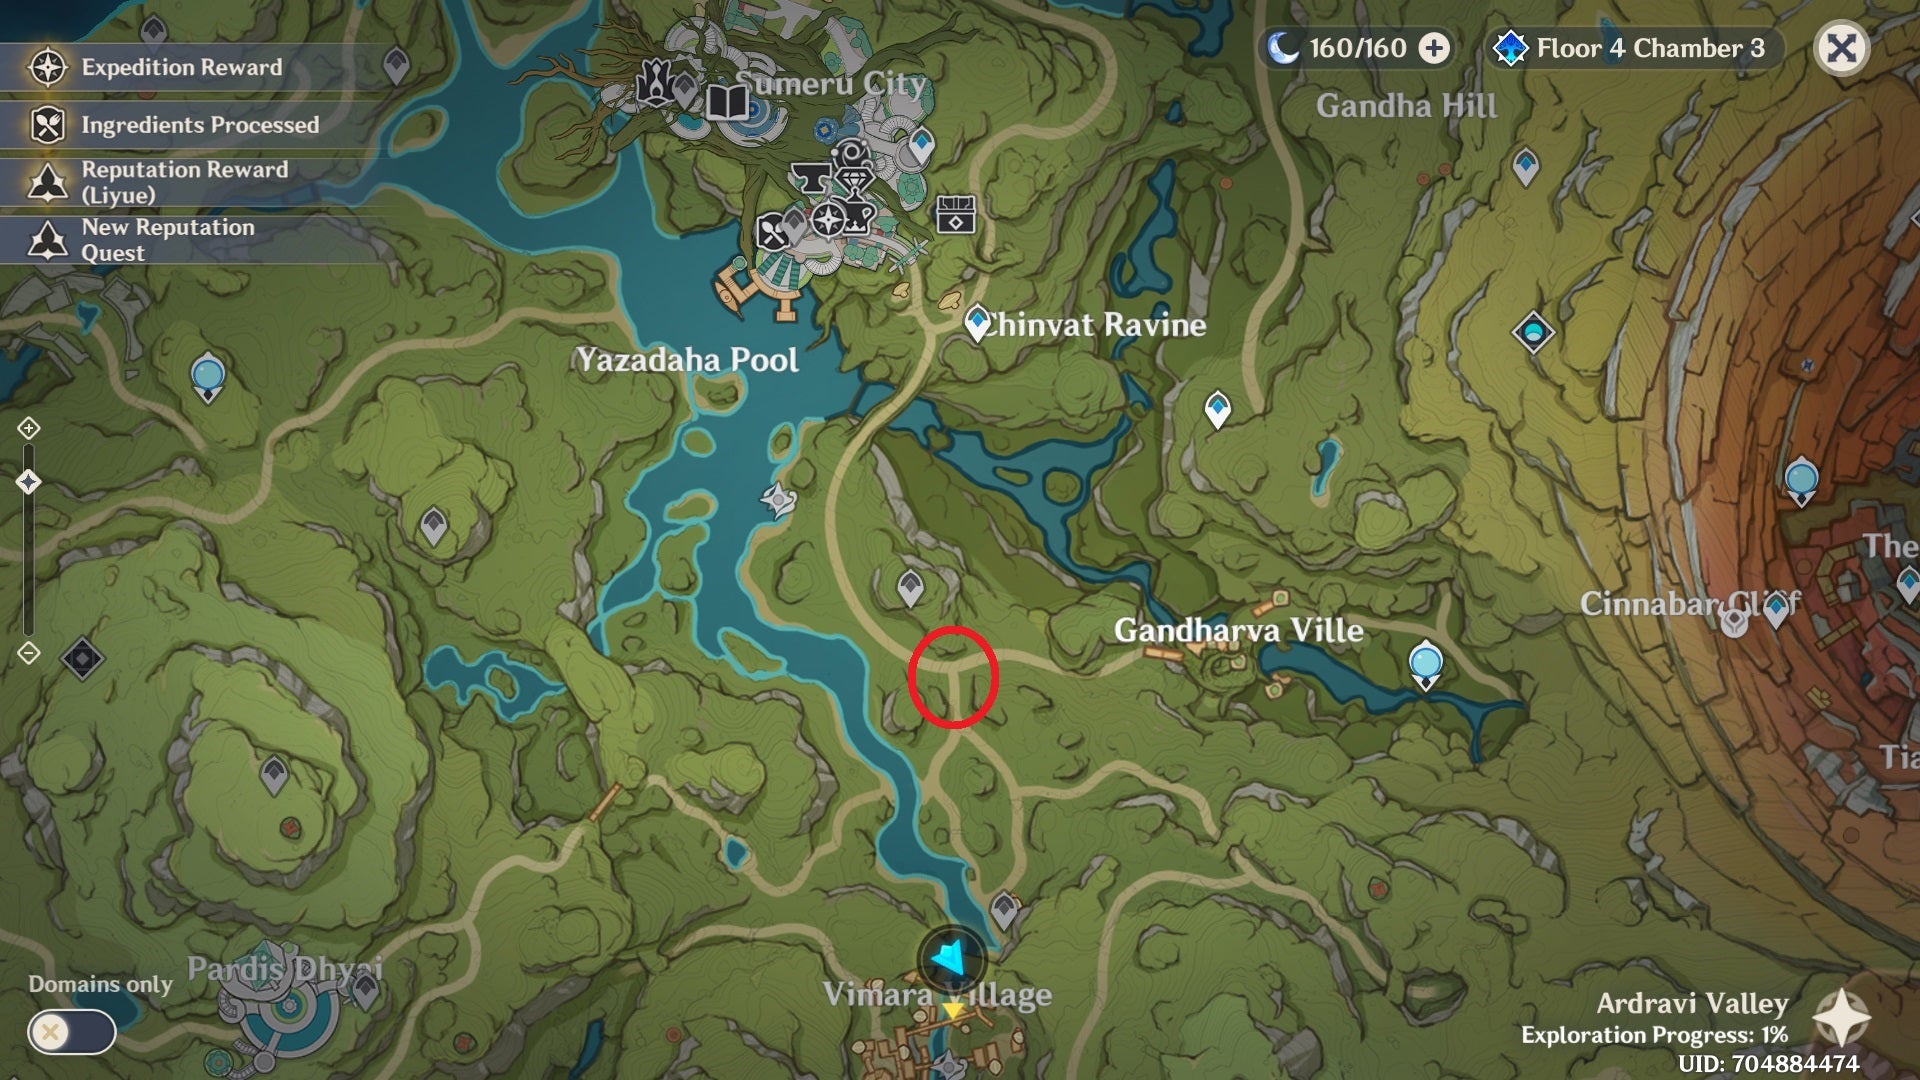 Location of Aranyaka quest on map in Genshin Impact